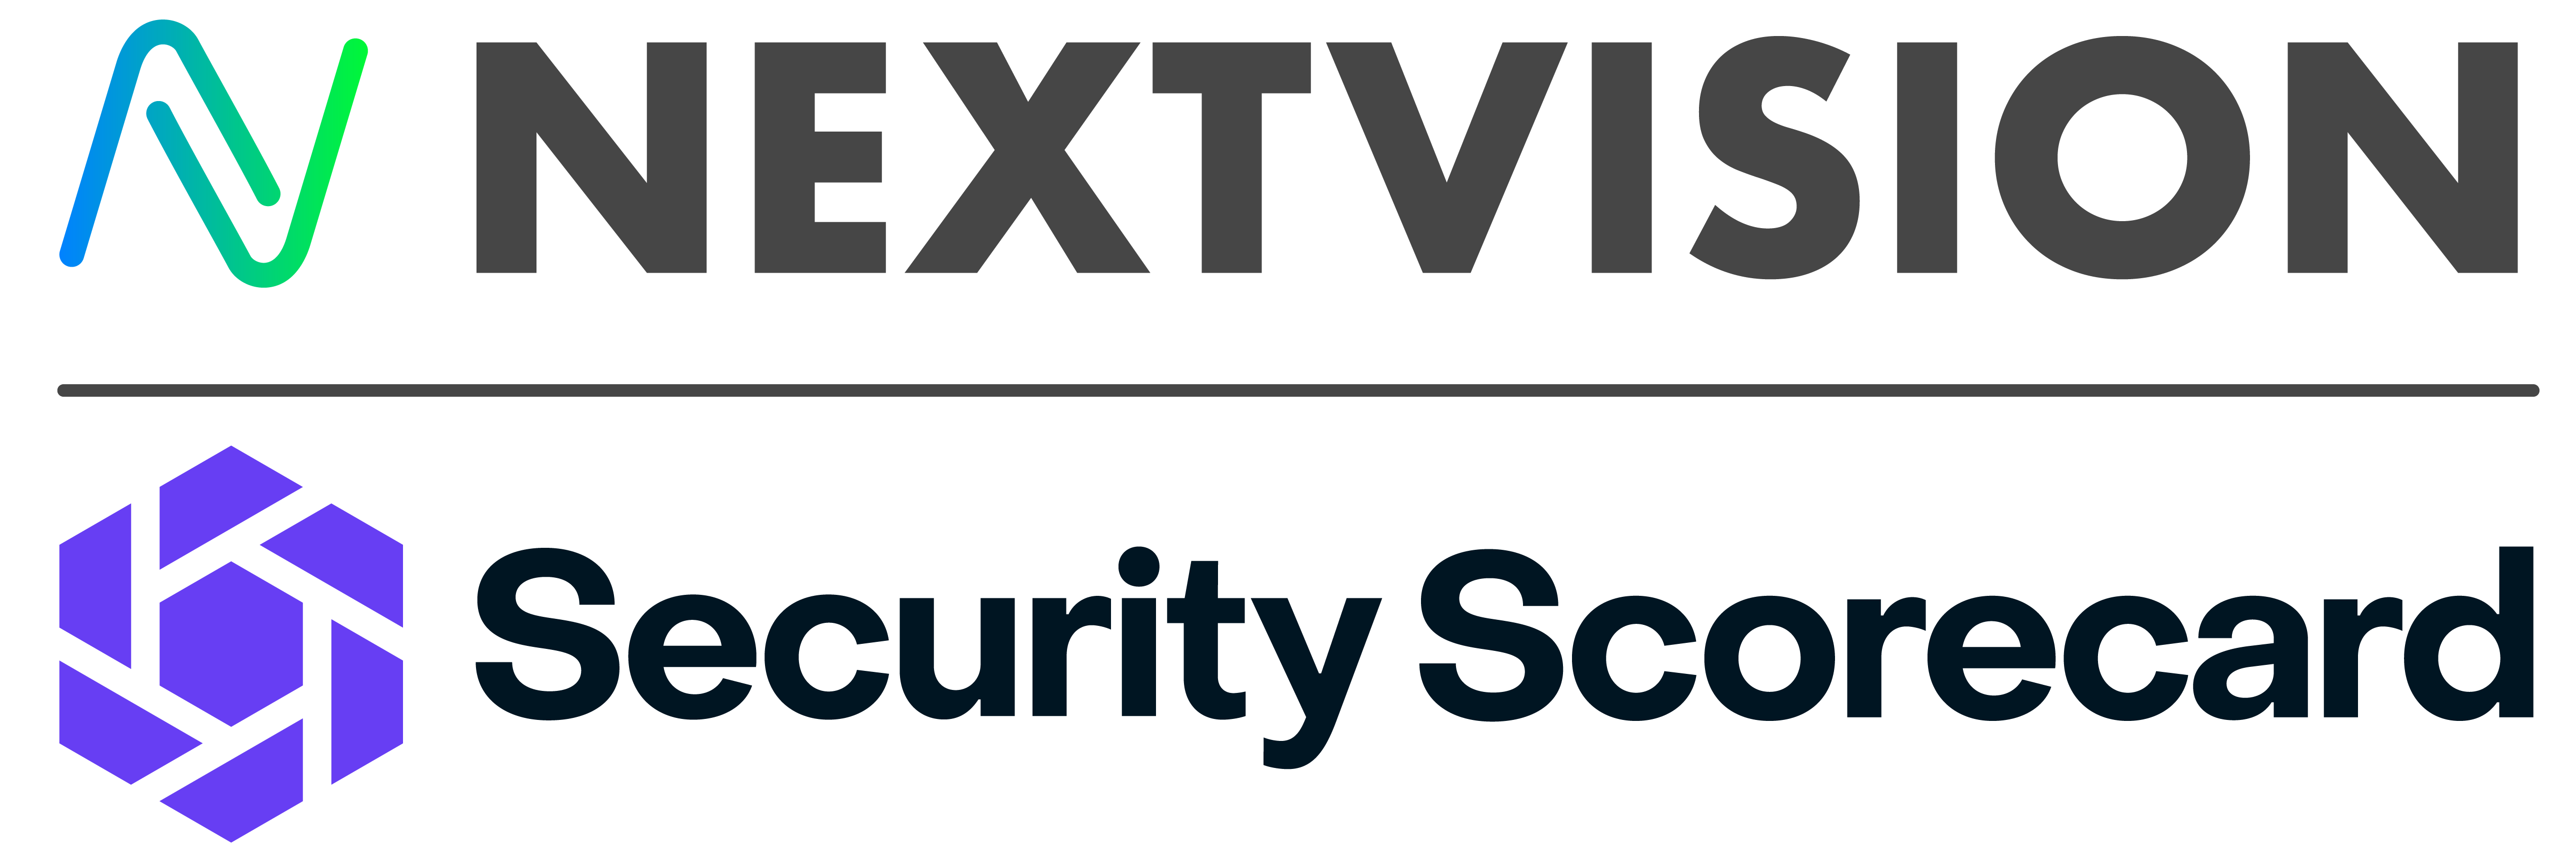 NextVision + Security Scorecard